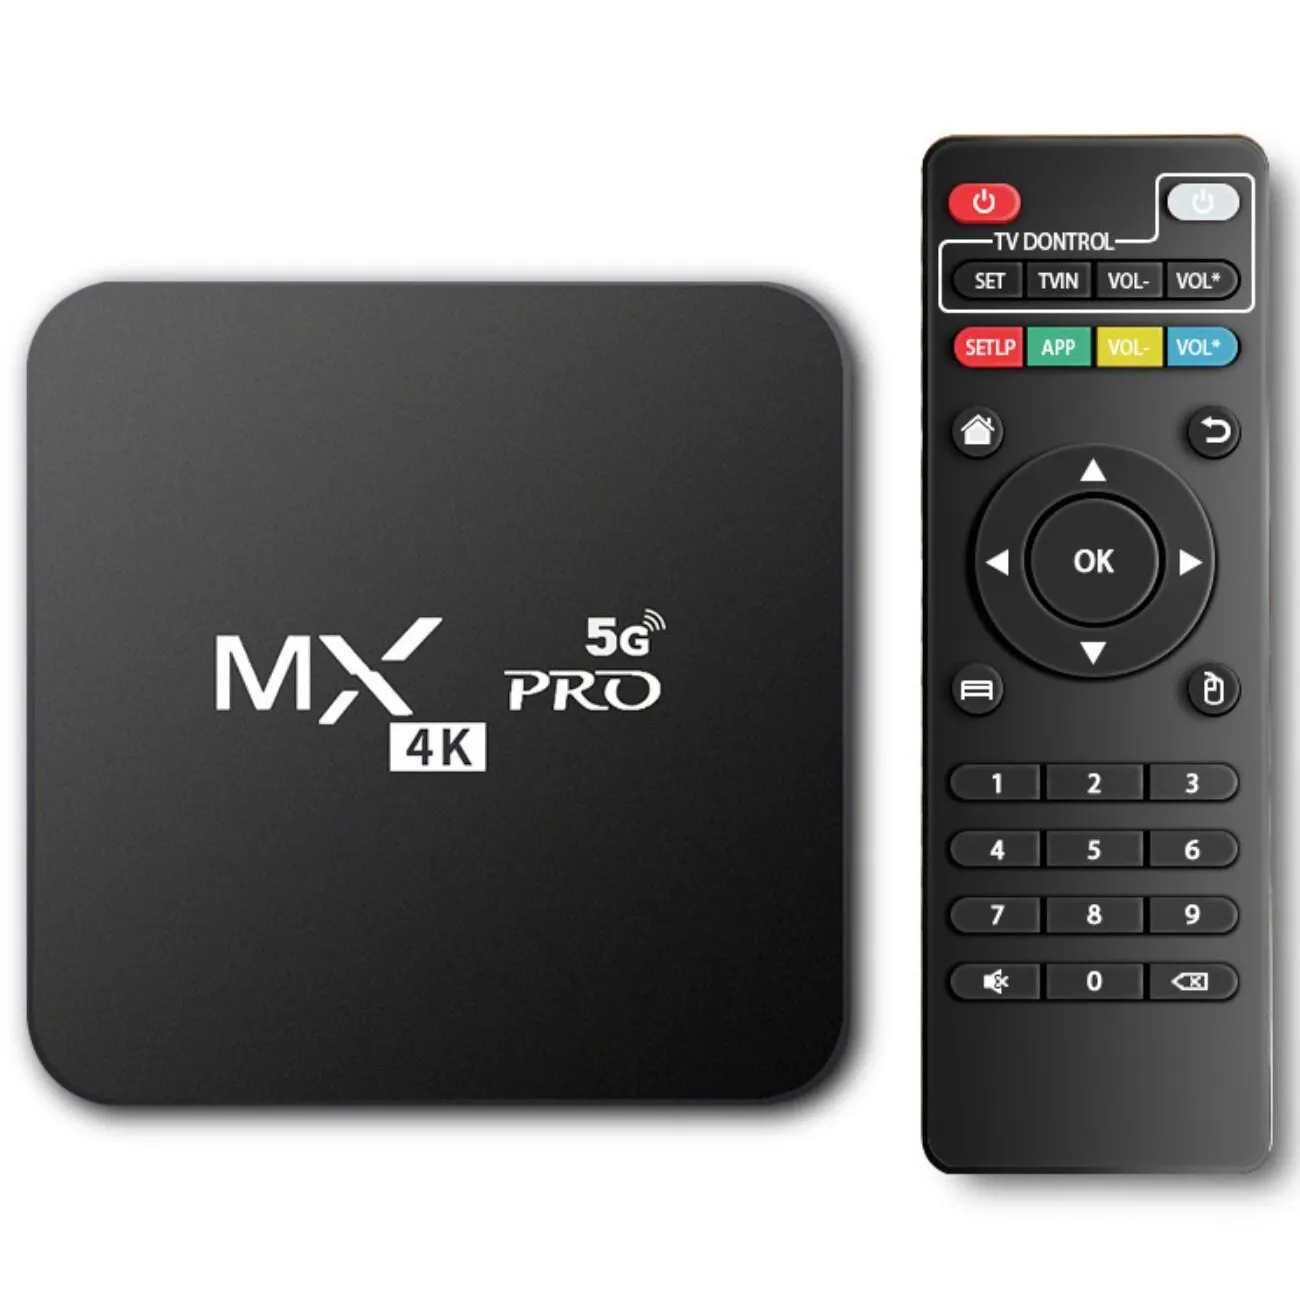 Hot Sale MXQ PRO Amlogic Android 1GB Ram 8GB Rom Free WiFi OTT Smart TV H.265 4K Android TV Box